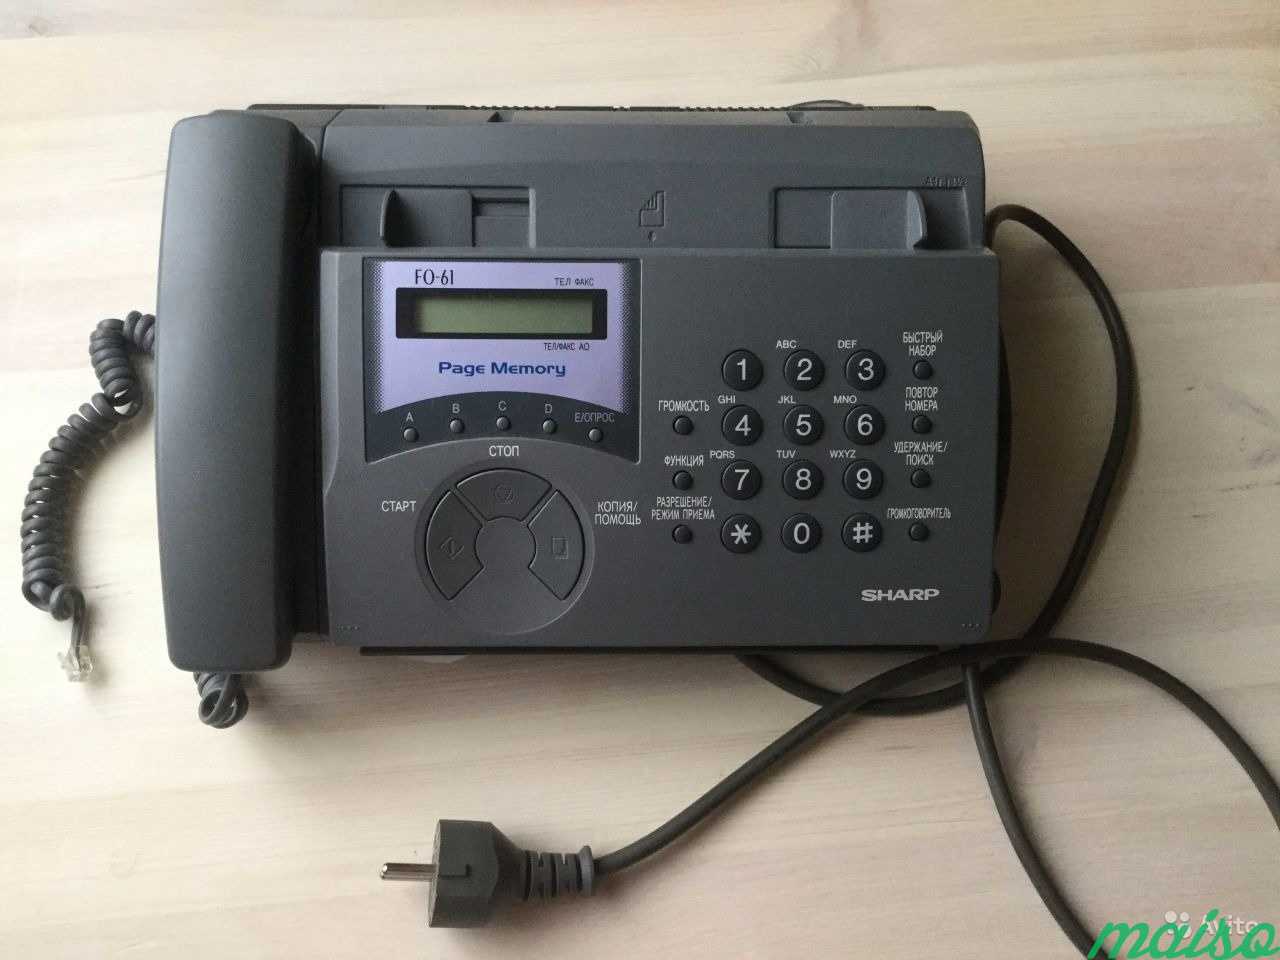 Телефон факс sharp FO-61 в Санкт-Петербурге. Фото 1